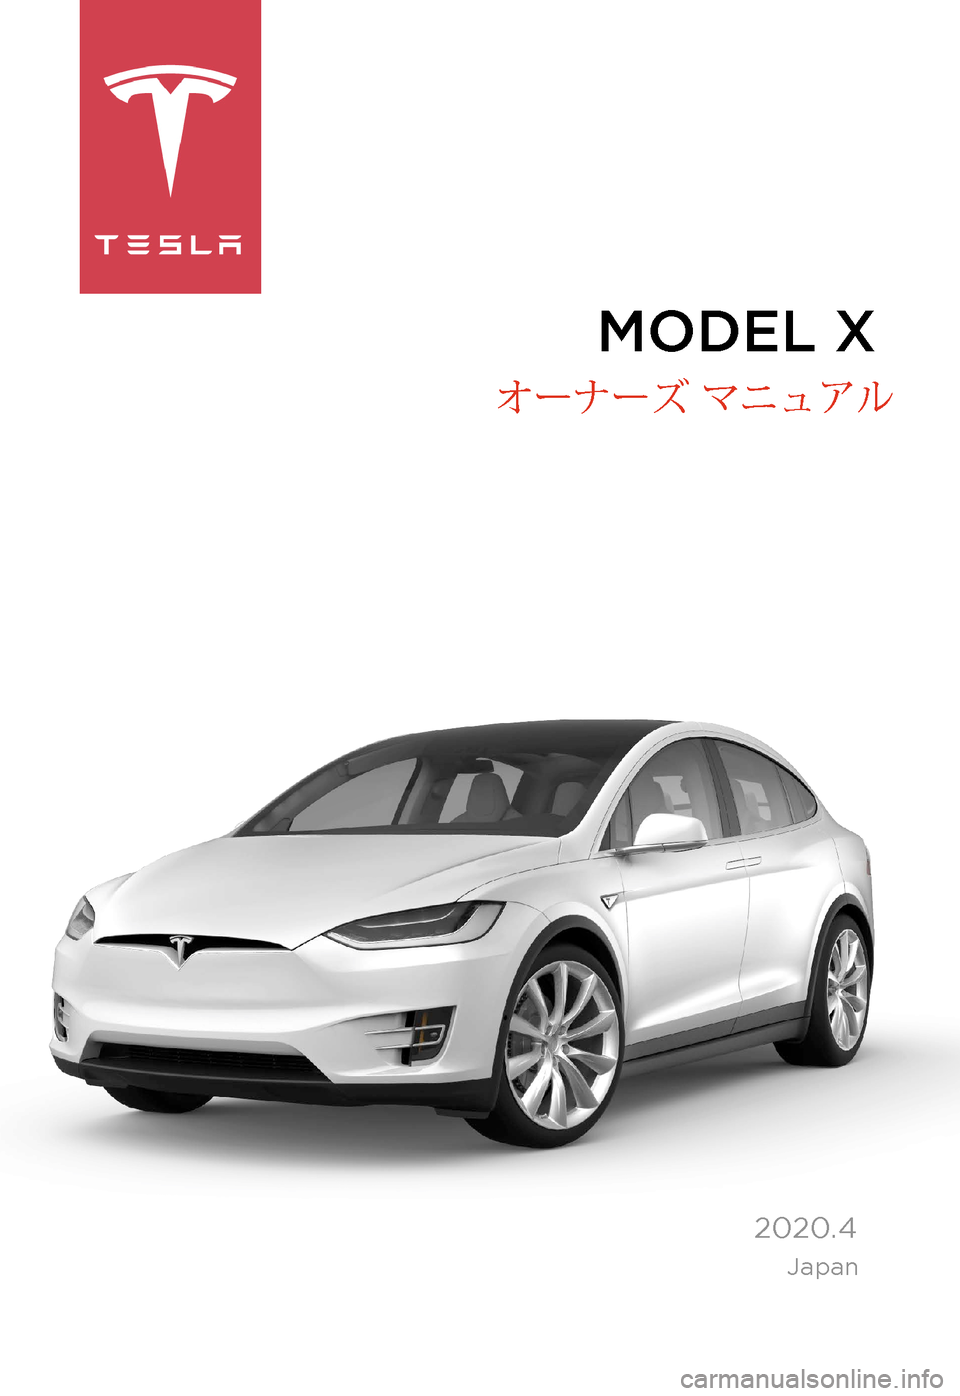 TESLA MODEL X 2020  取扱説明書 (in Japanese) MODEL X

オーナーズ マニュアル
2020.4
  Japan 